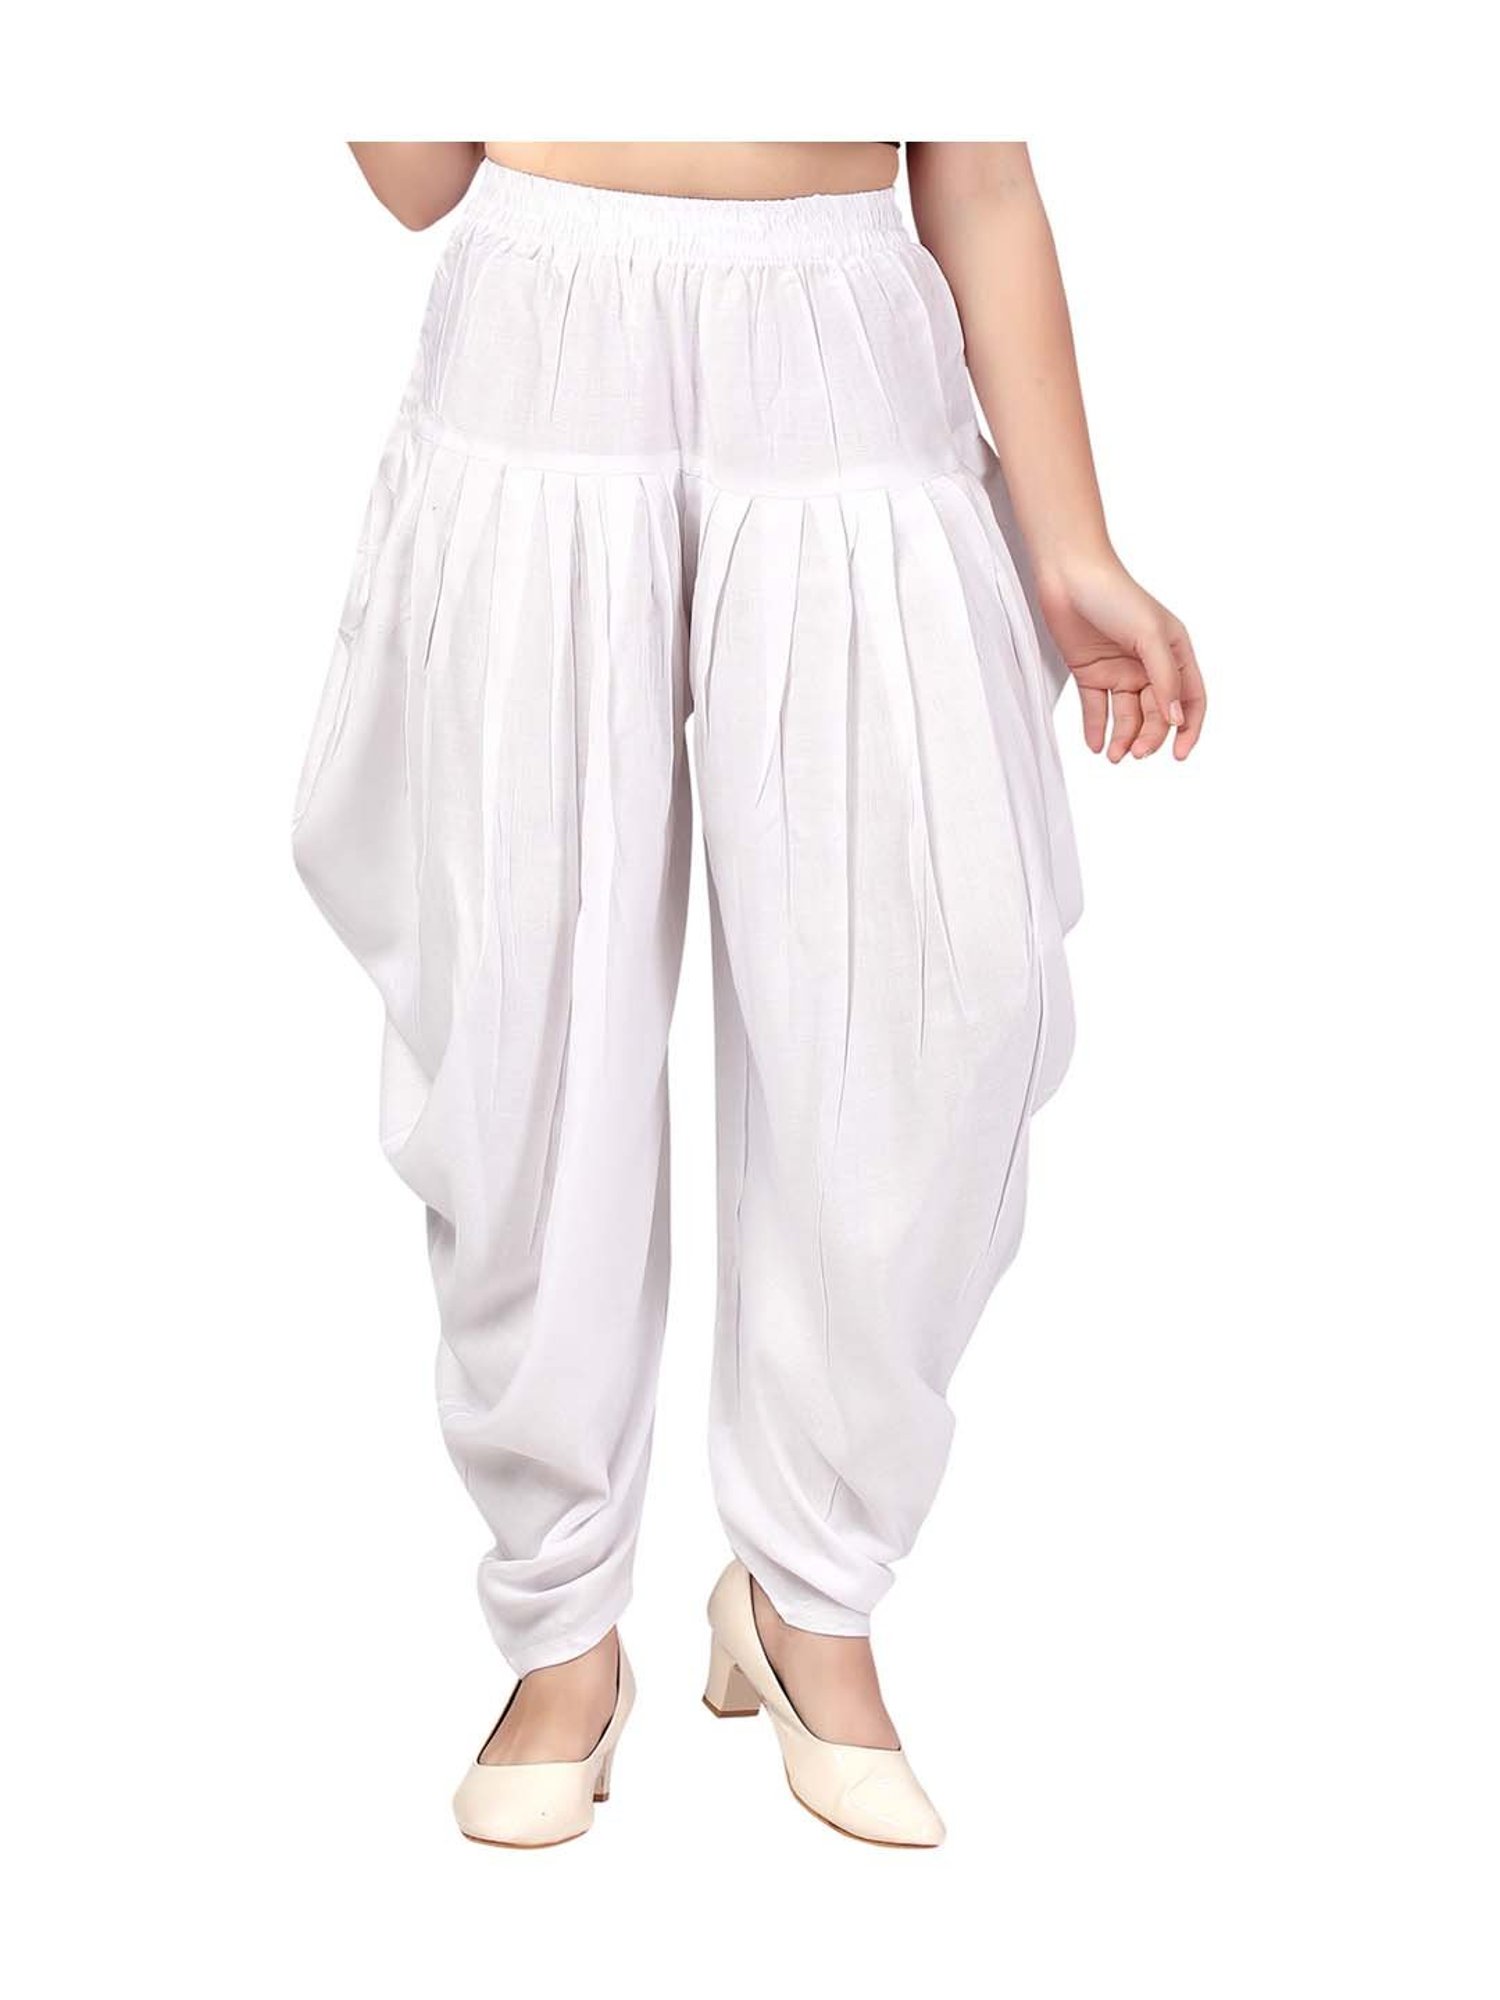 Buy White Skinny Jeans for Girls Online at KIDS ONLY  176473901